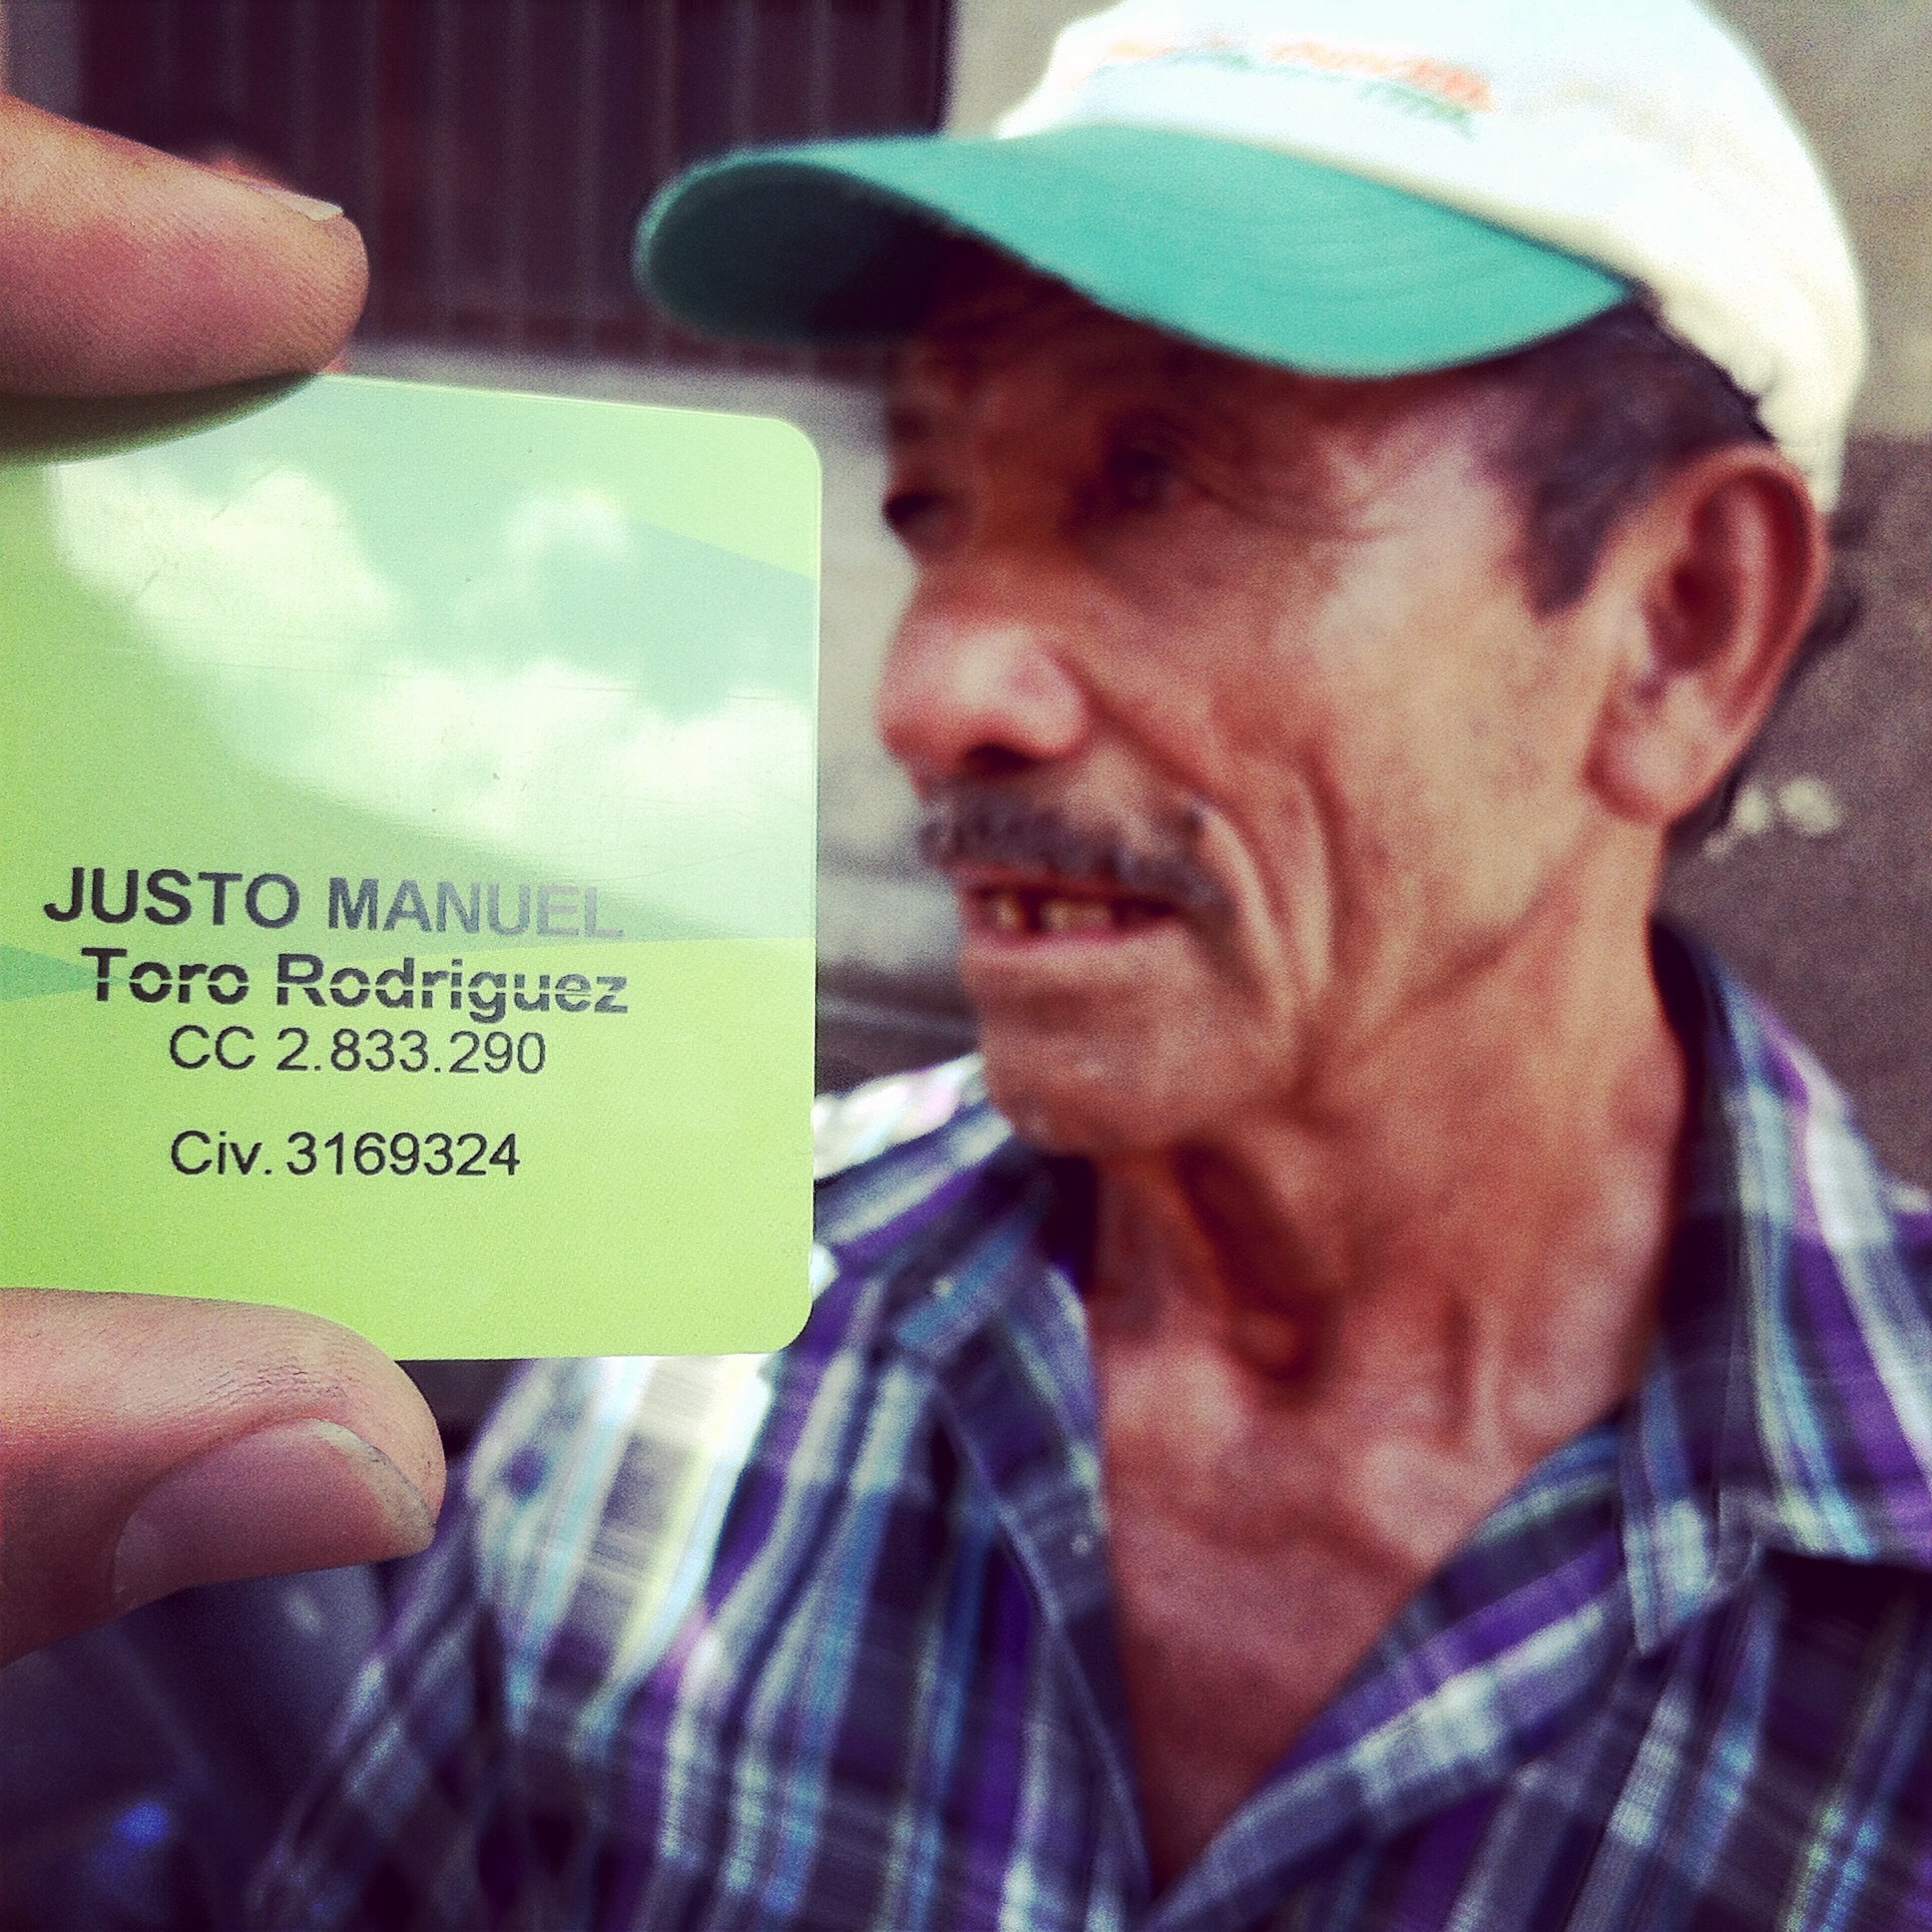 Justo Manuel get's a civica card.